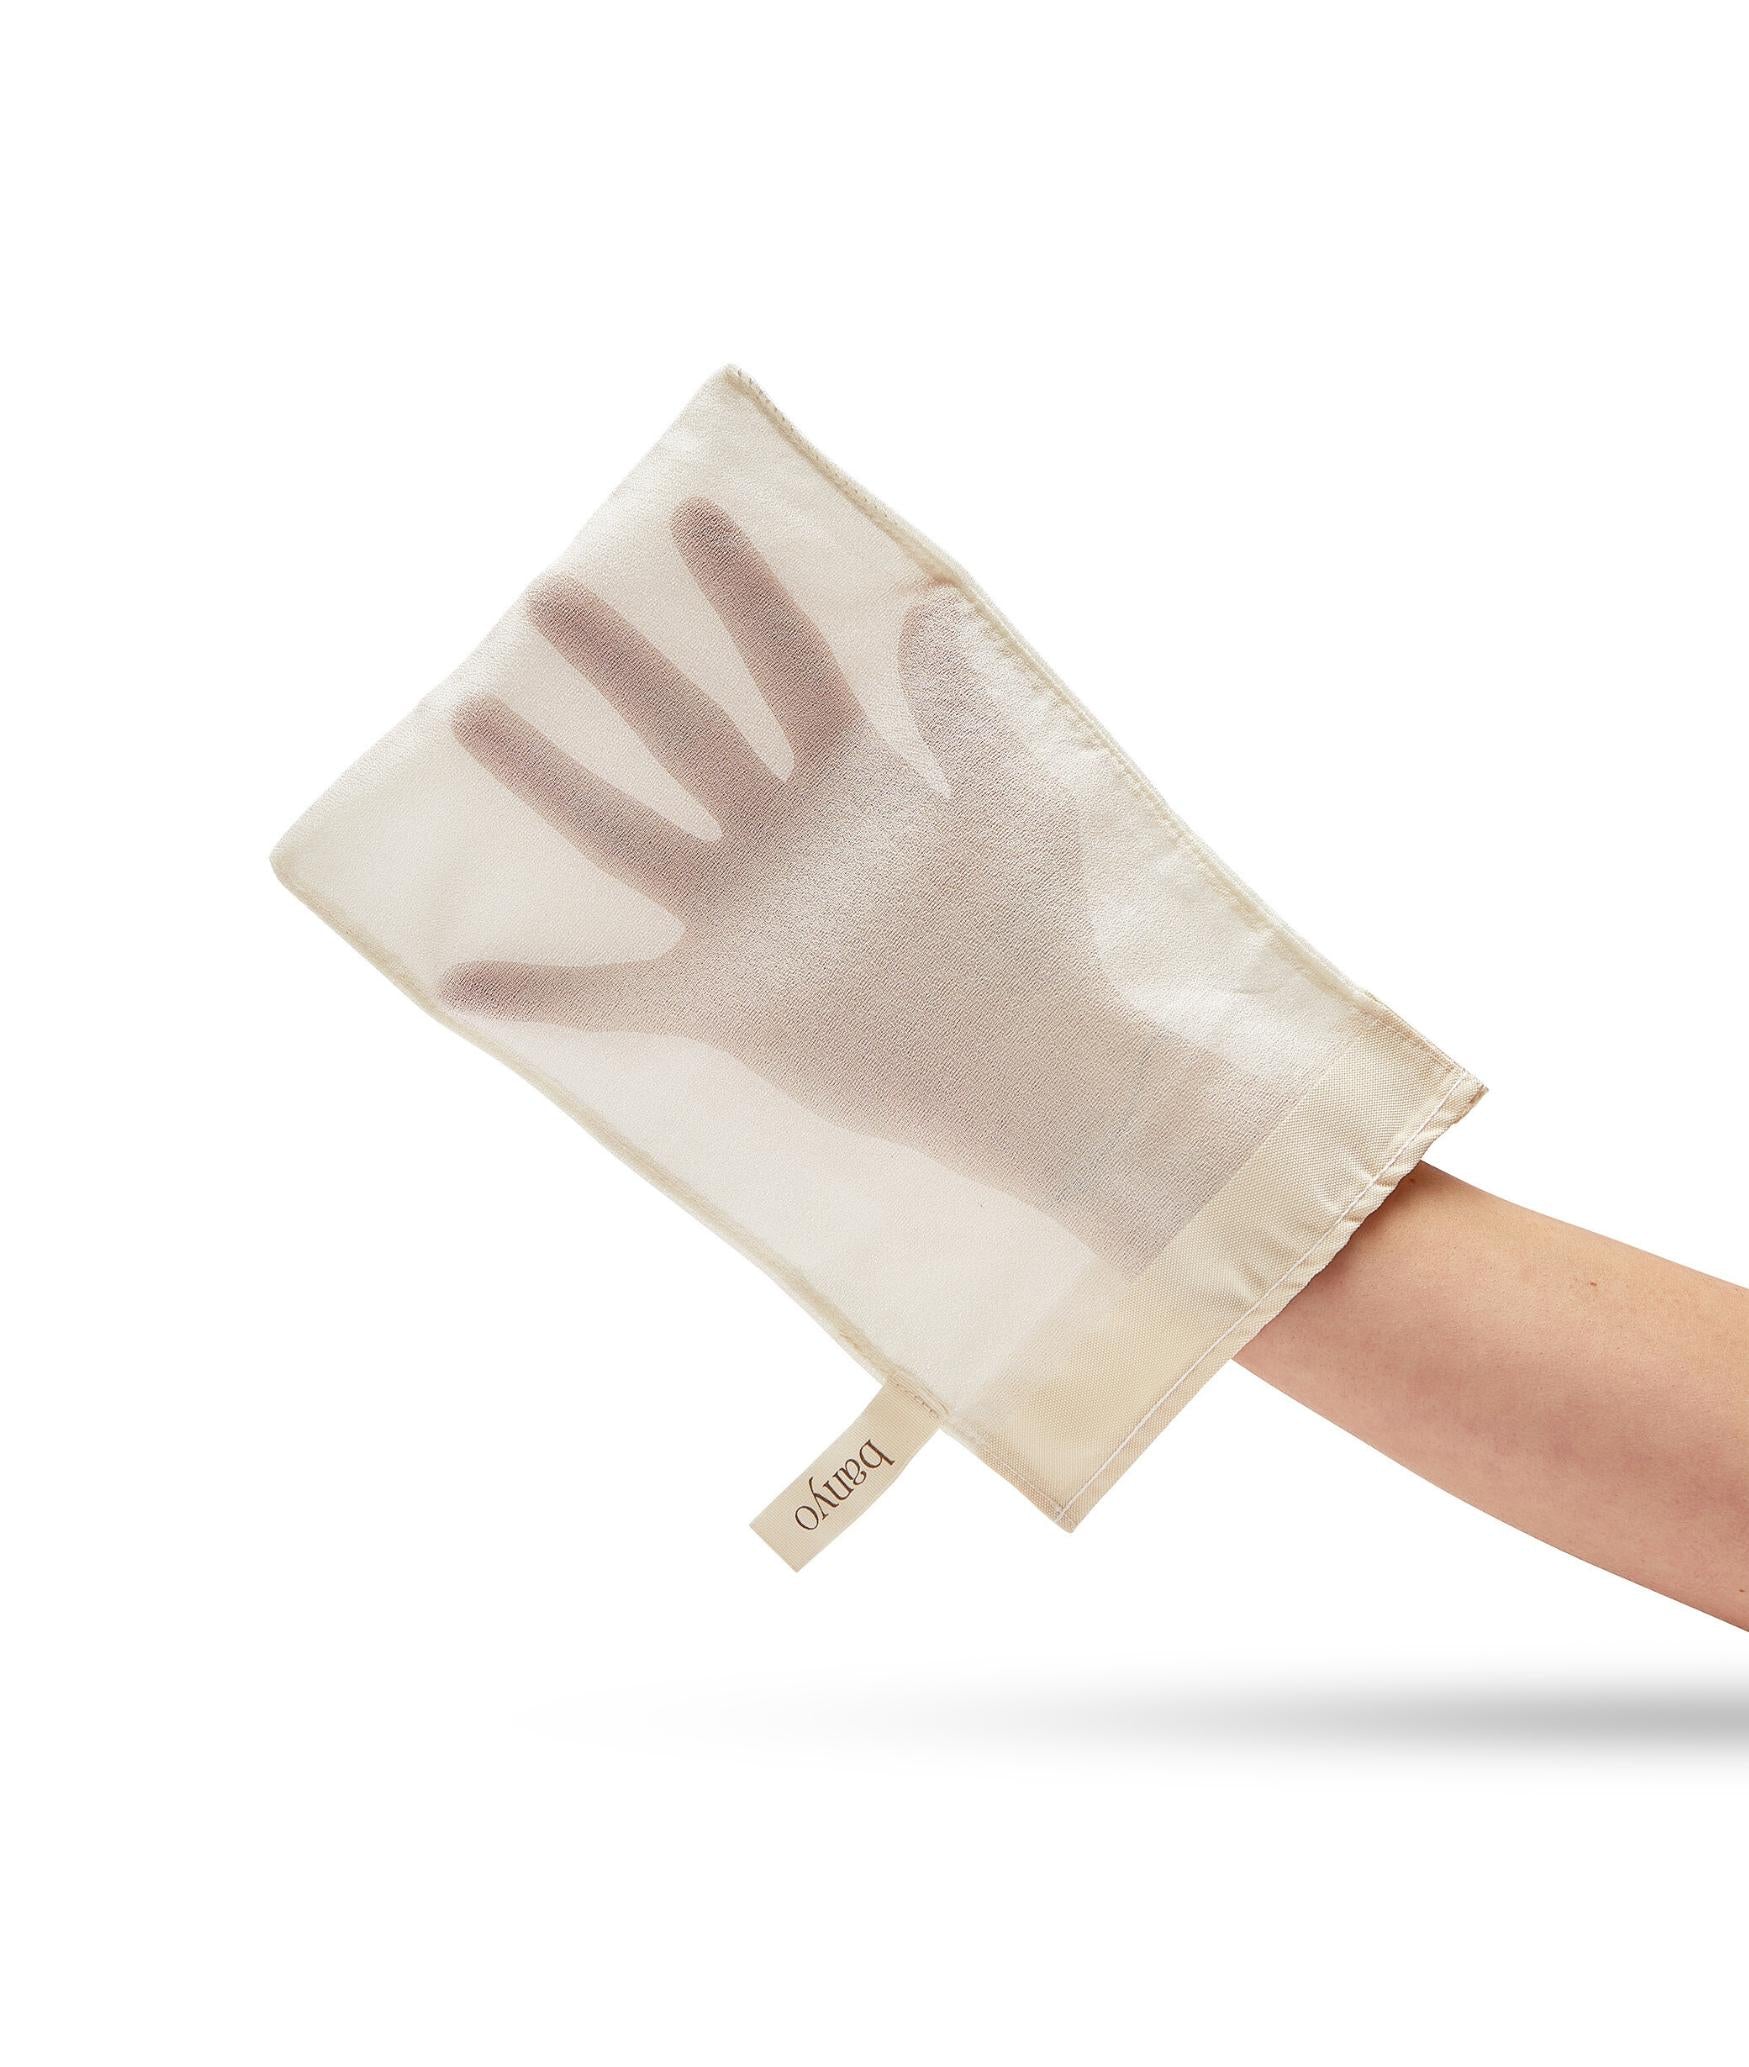 Silky Exfoliating Glove | Sensitive Skin